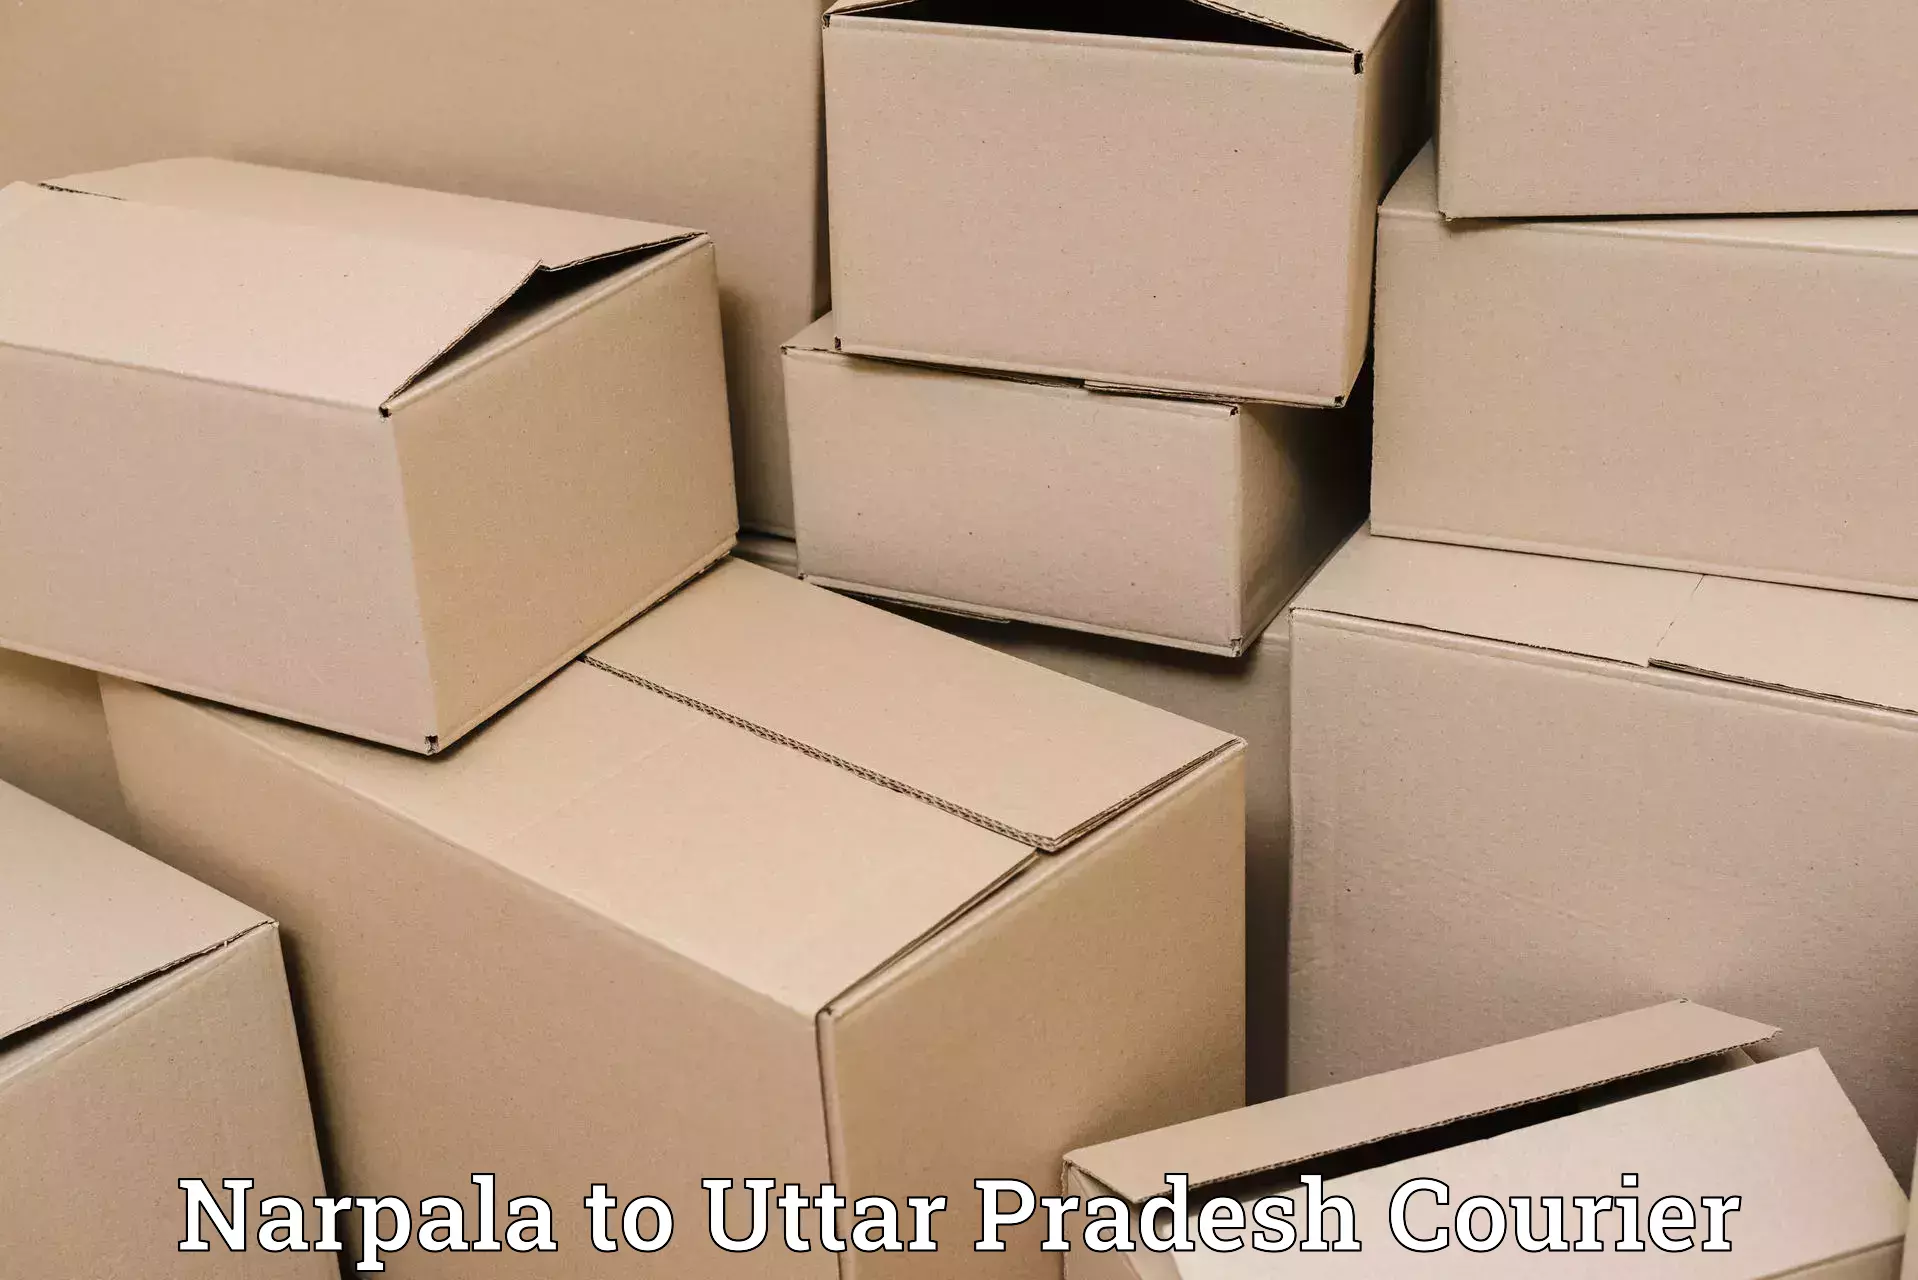 Seamless shipping experience Narpala to Allahabad